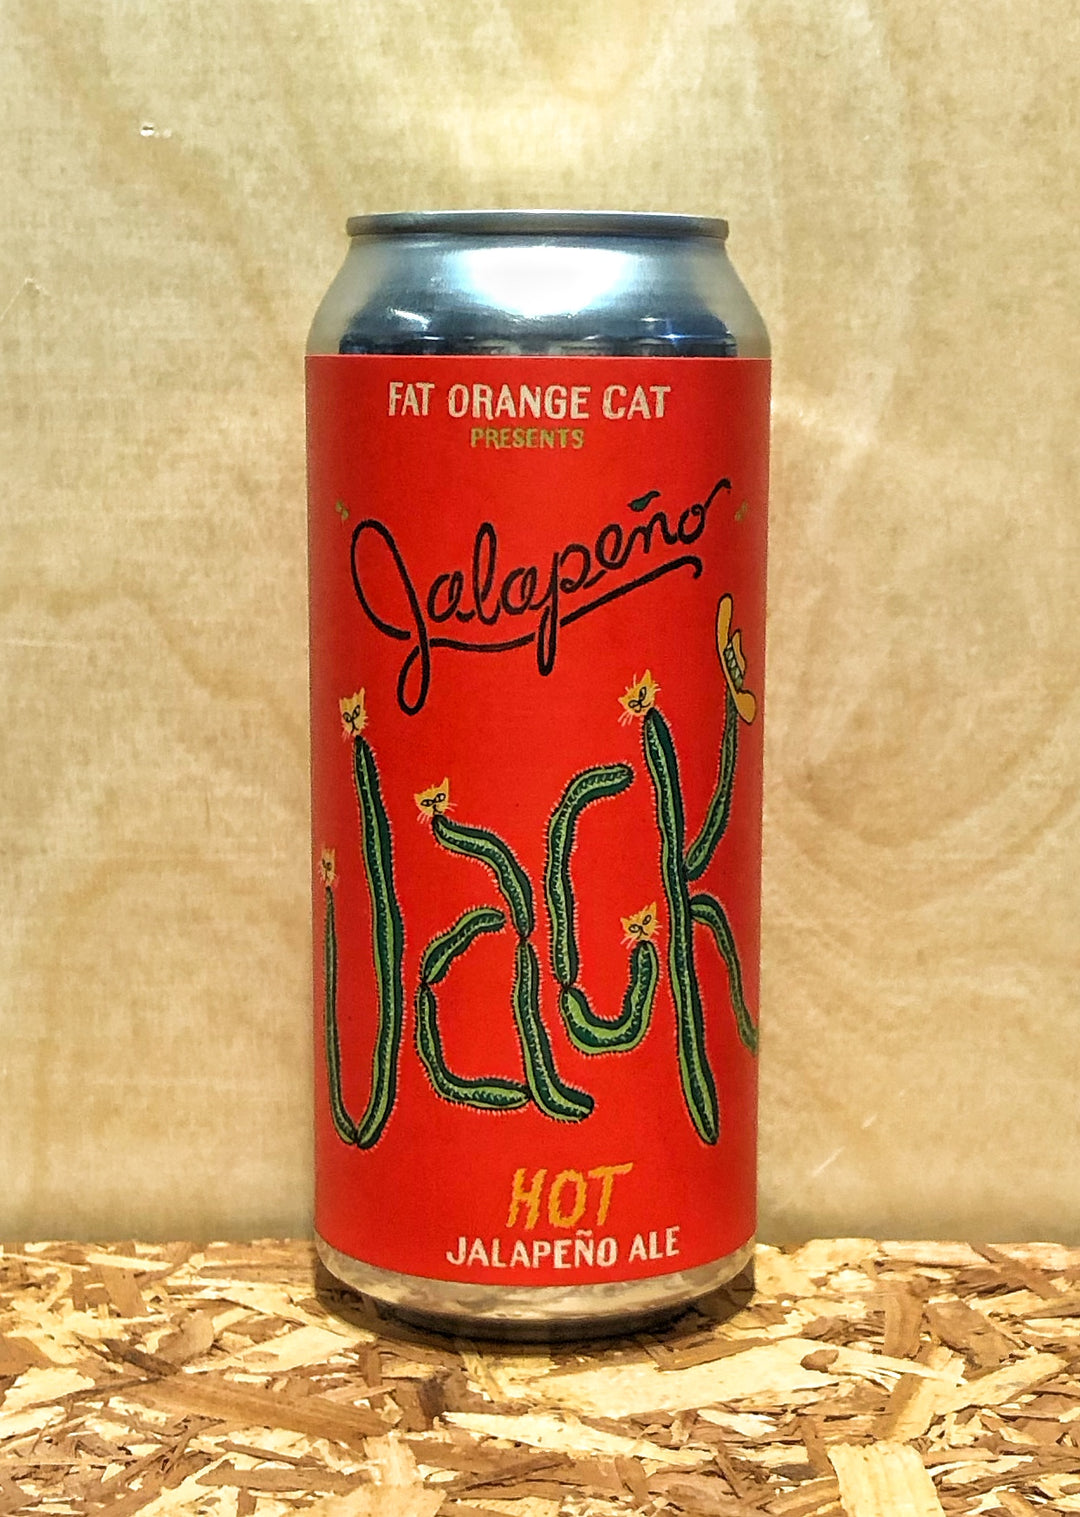 Fat Orange Cat 'Jalapeño Jack' Hot Jalapeño Ale (North Haven, CT)